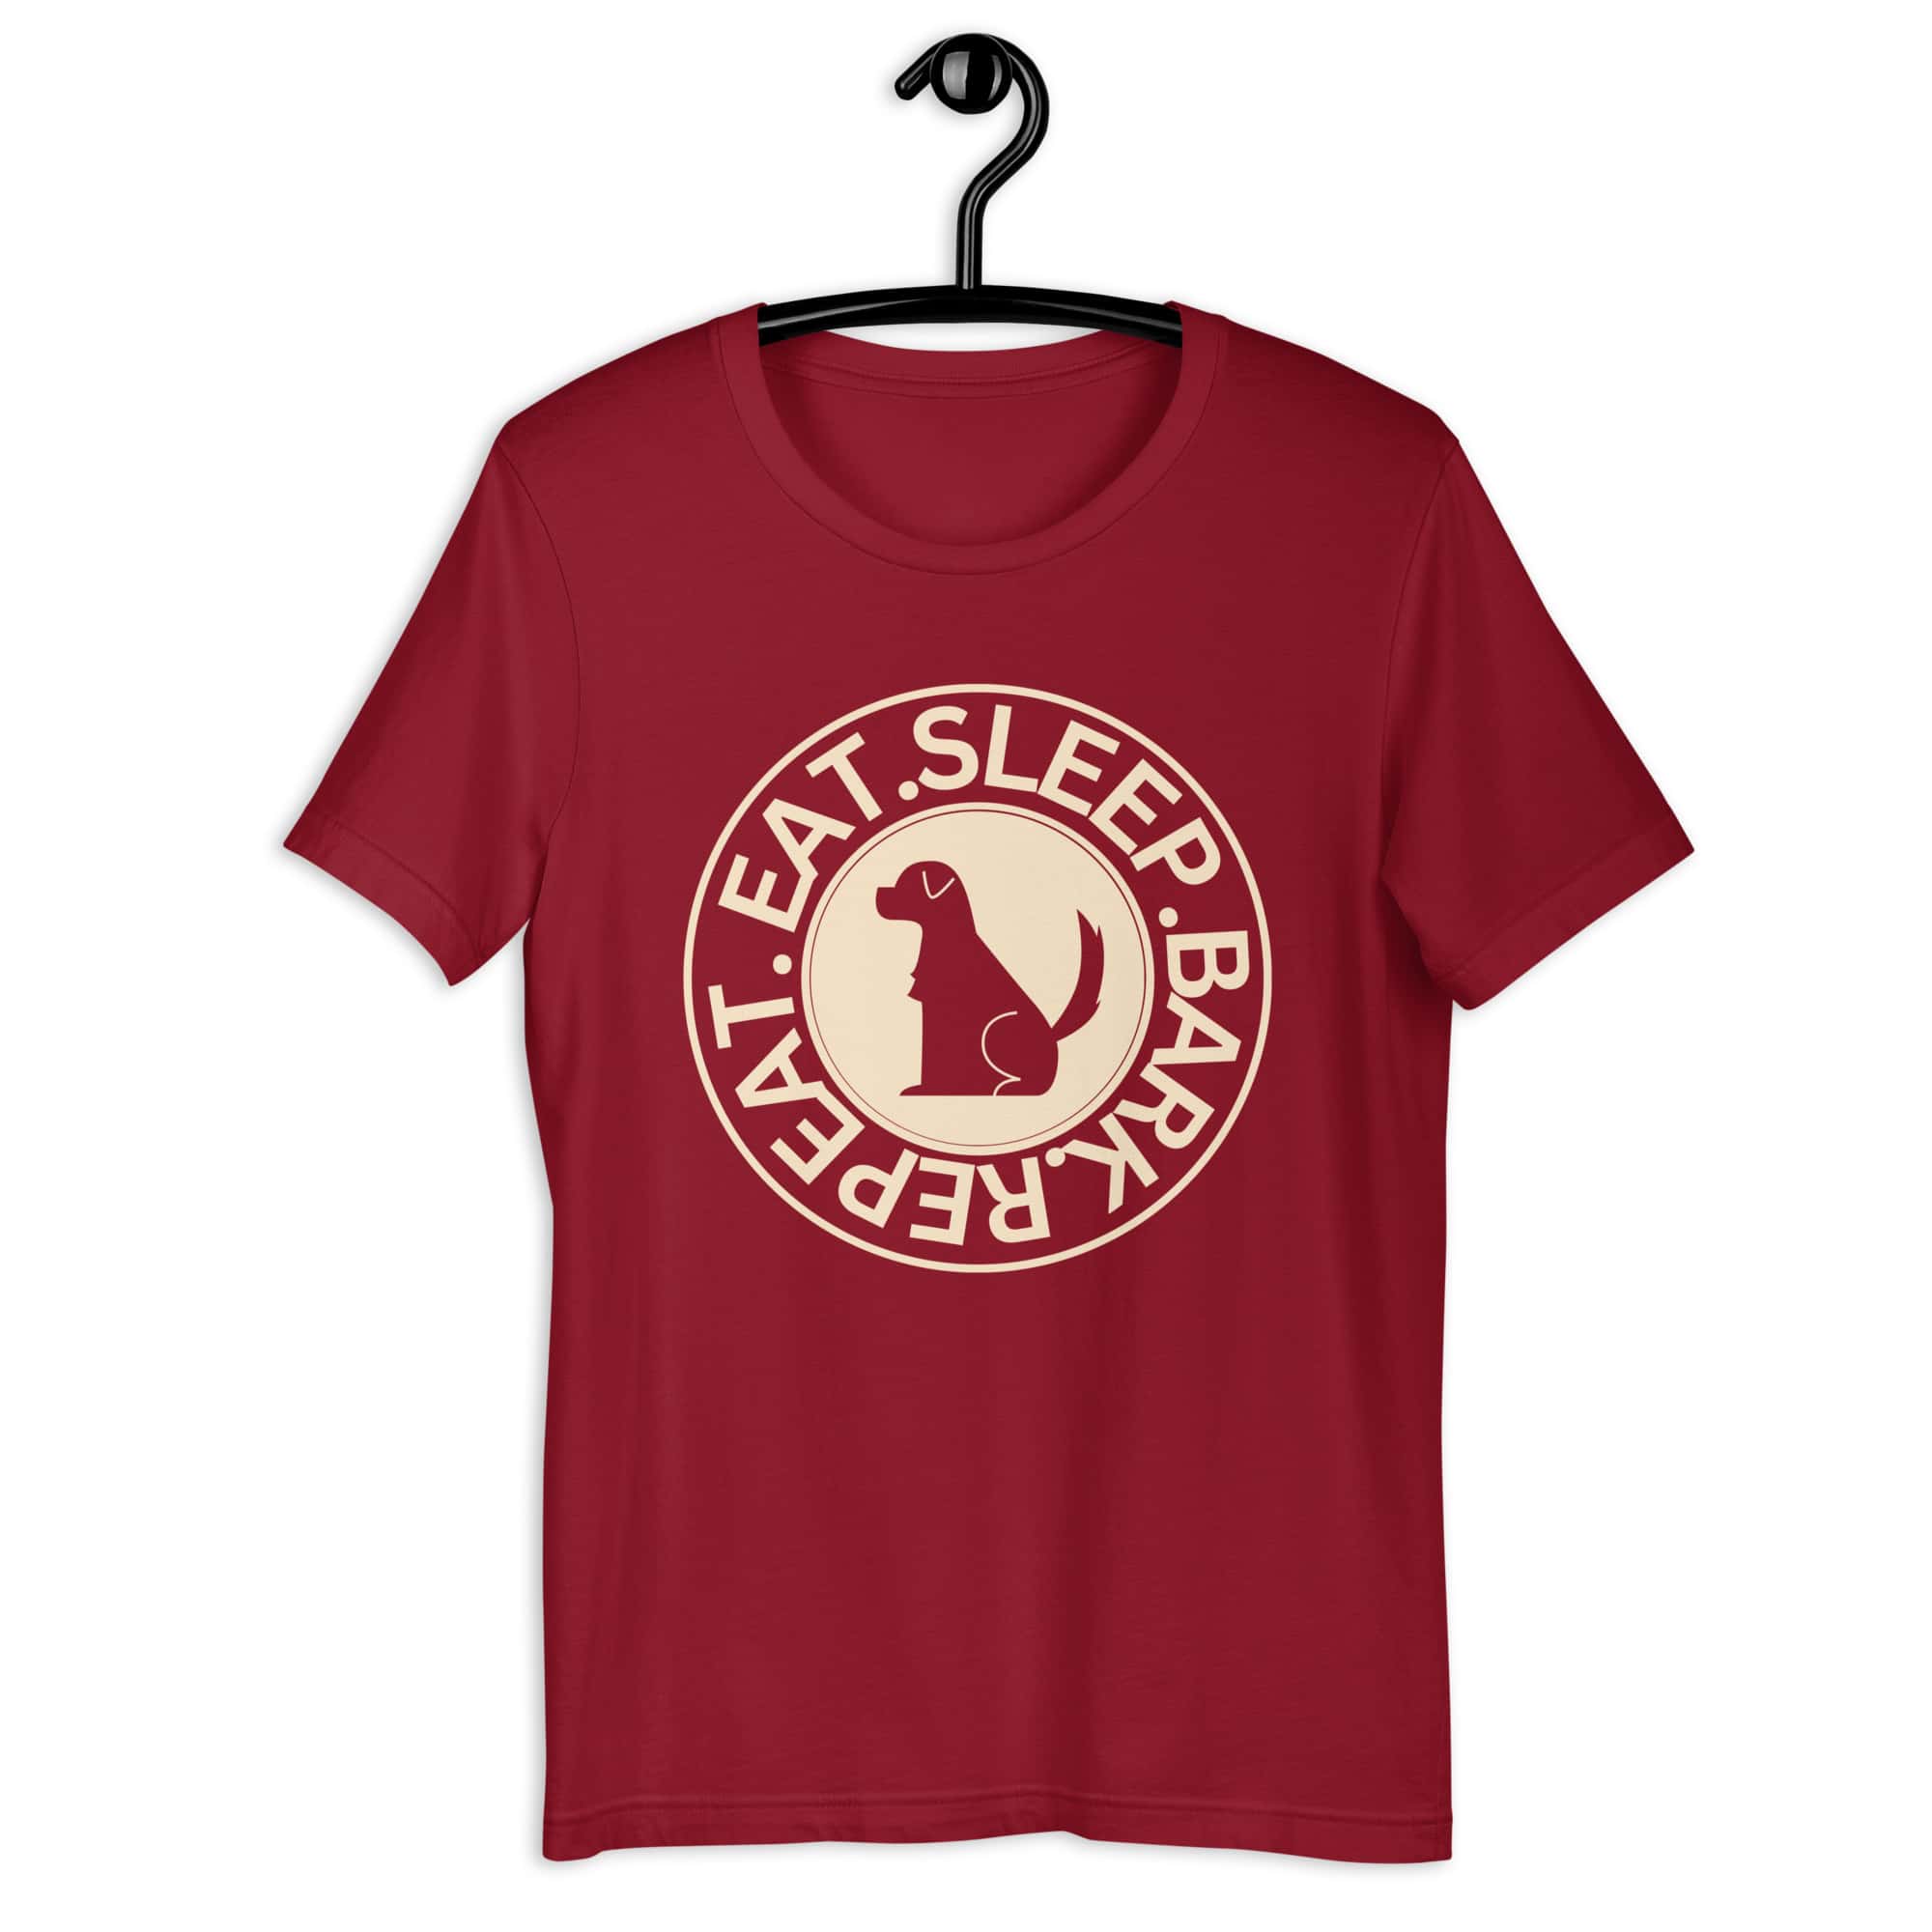 Eat Sleep Bark Repeat Ansylvanian Hound Unisex T-Shirt. Cardinal